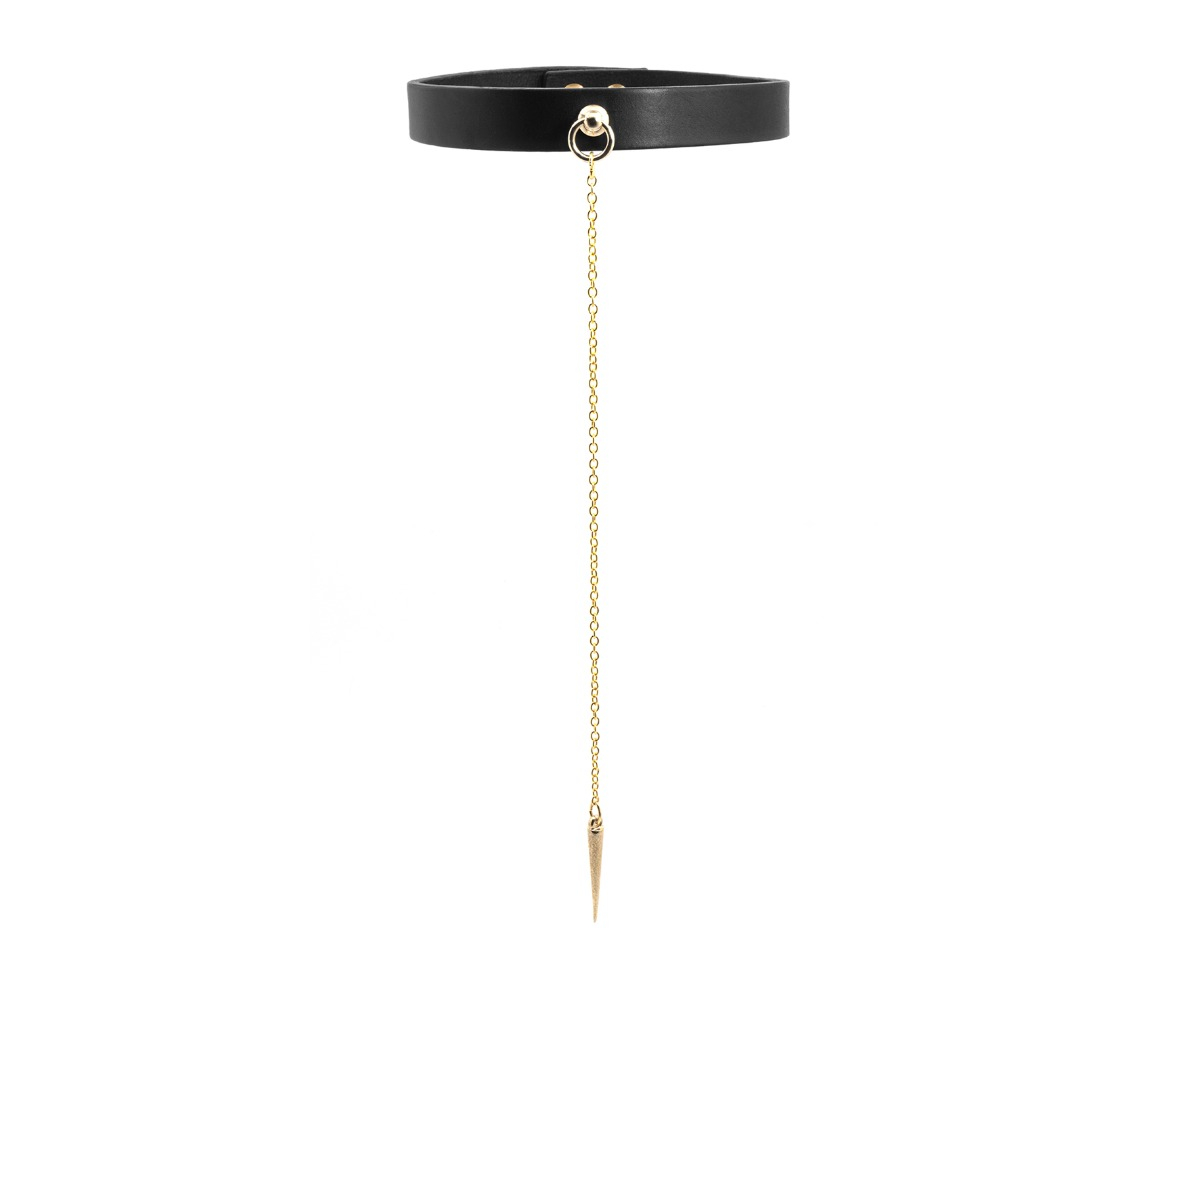 Black Leather Choker with Golden Pendulum